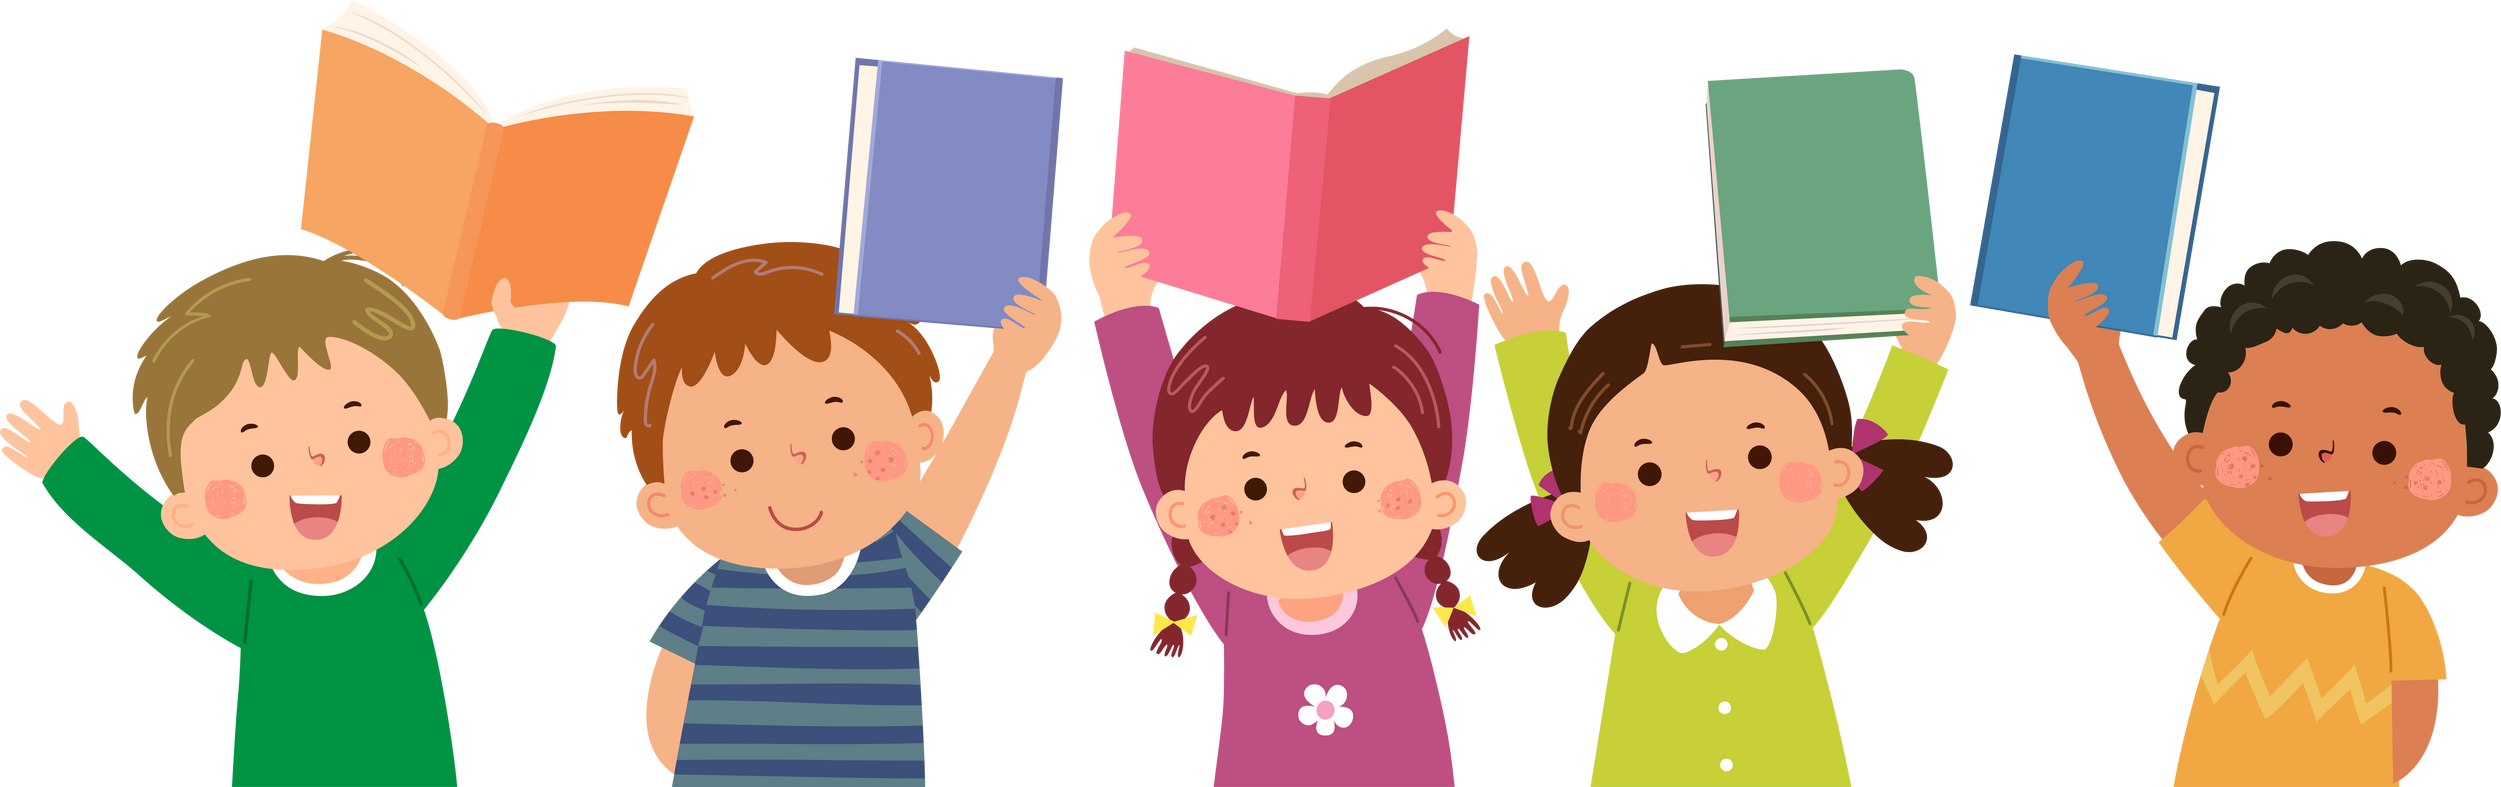 Cartoon children showing books over their heads